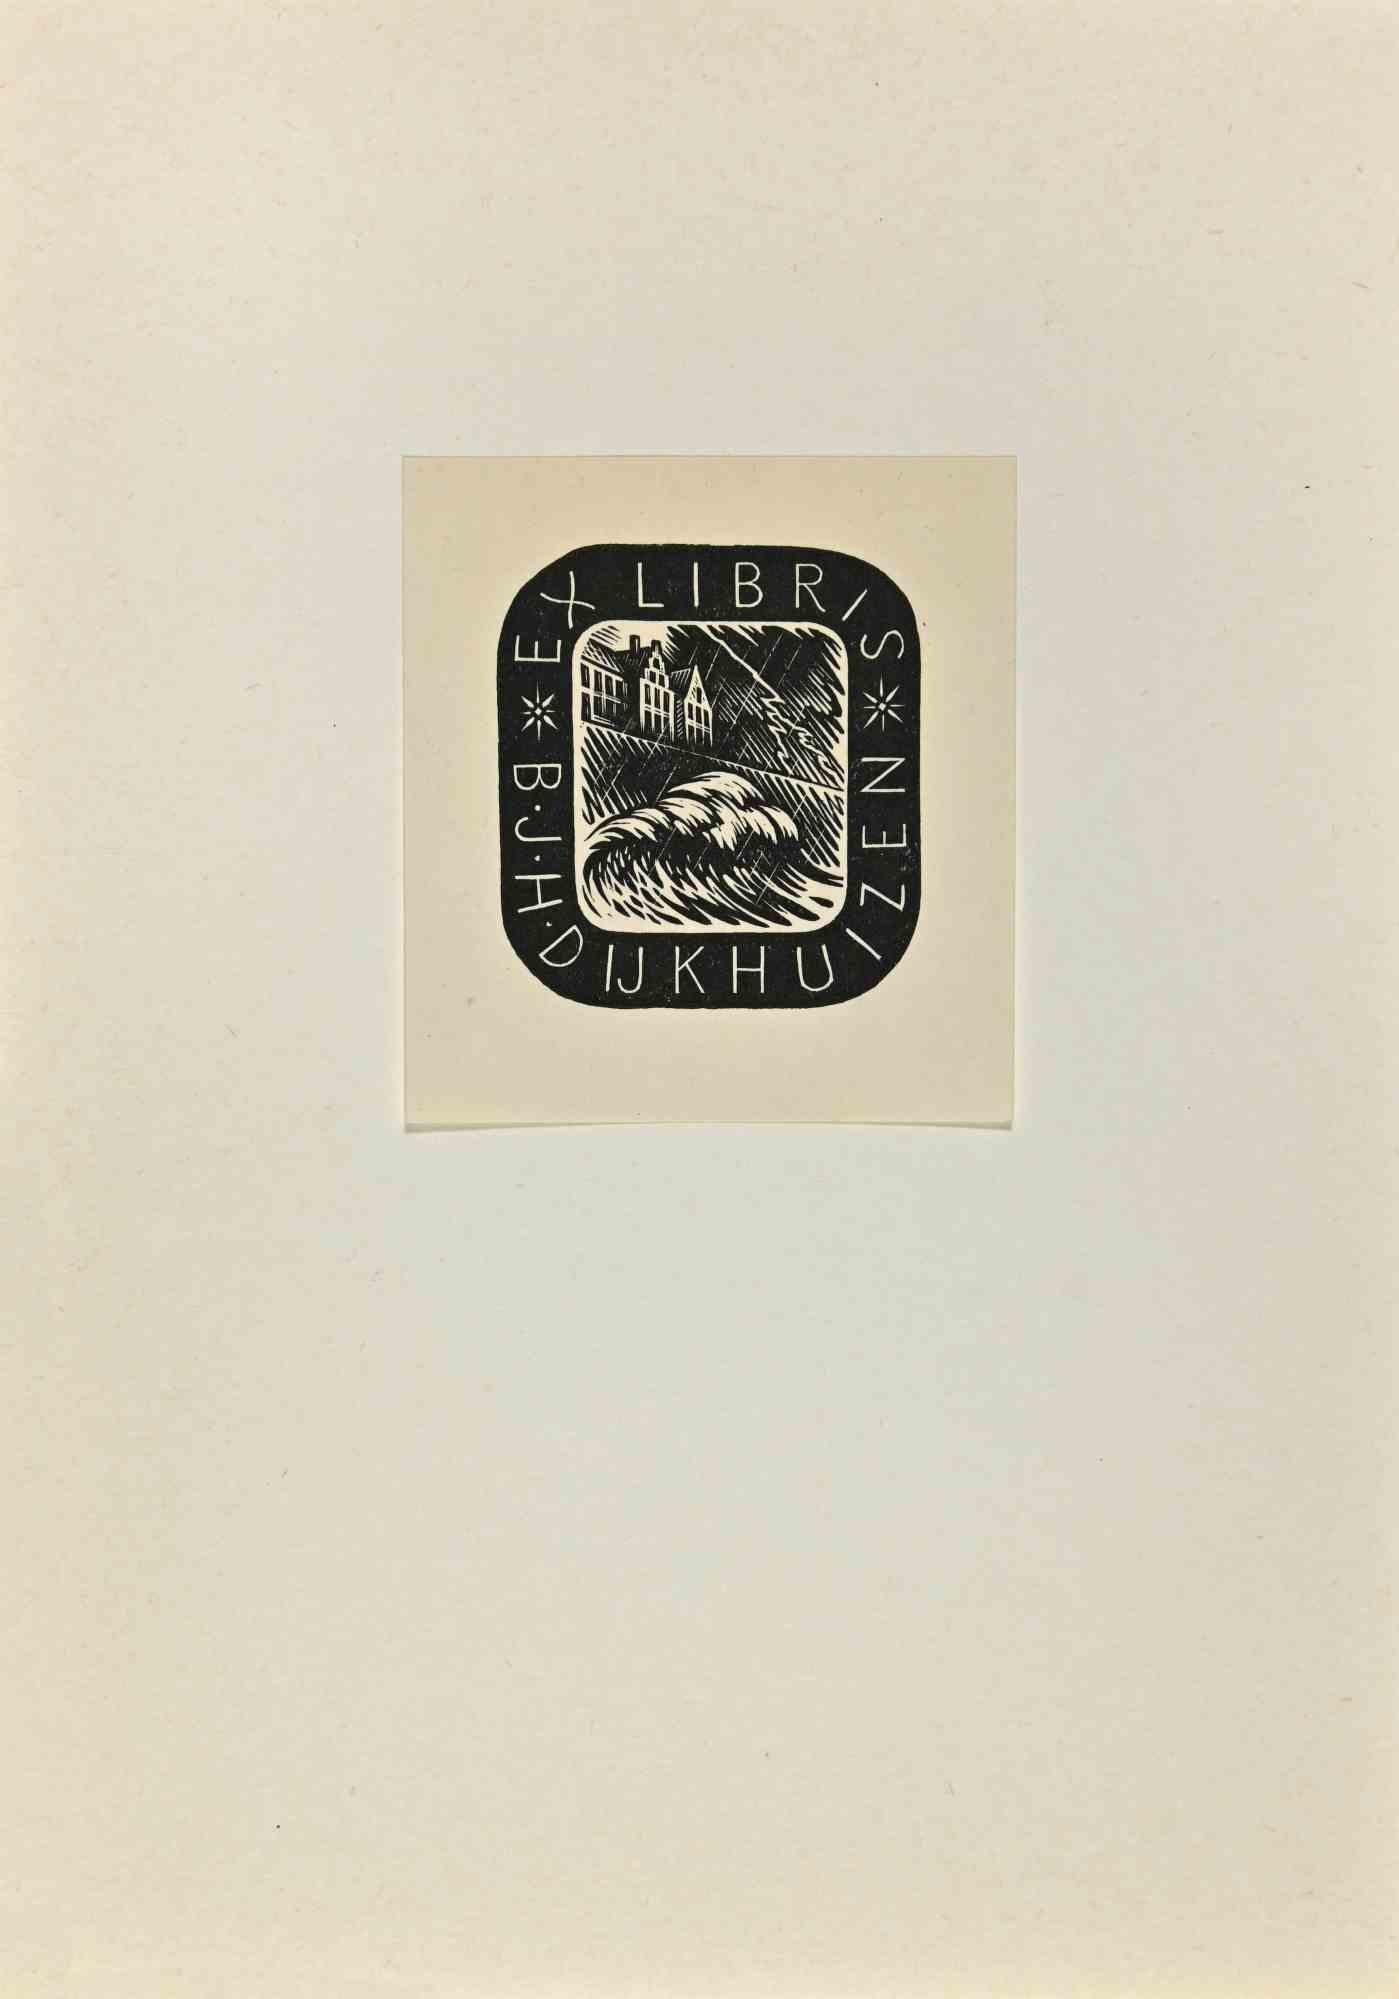  Ex Libris - Dijkhuizen - Woodcut - Mid 20th Century - Art by Unknown